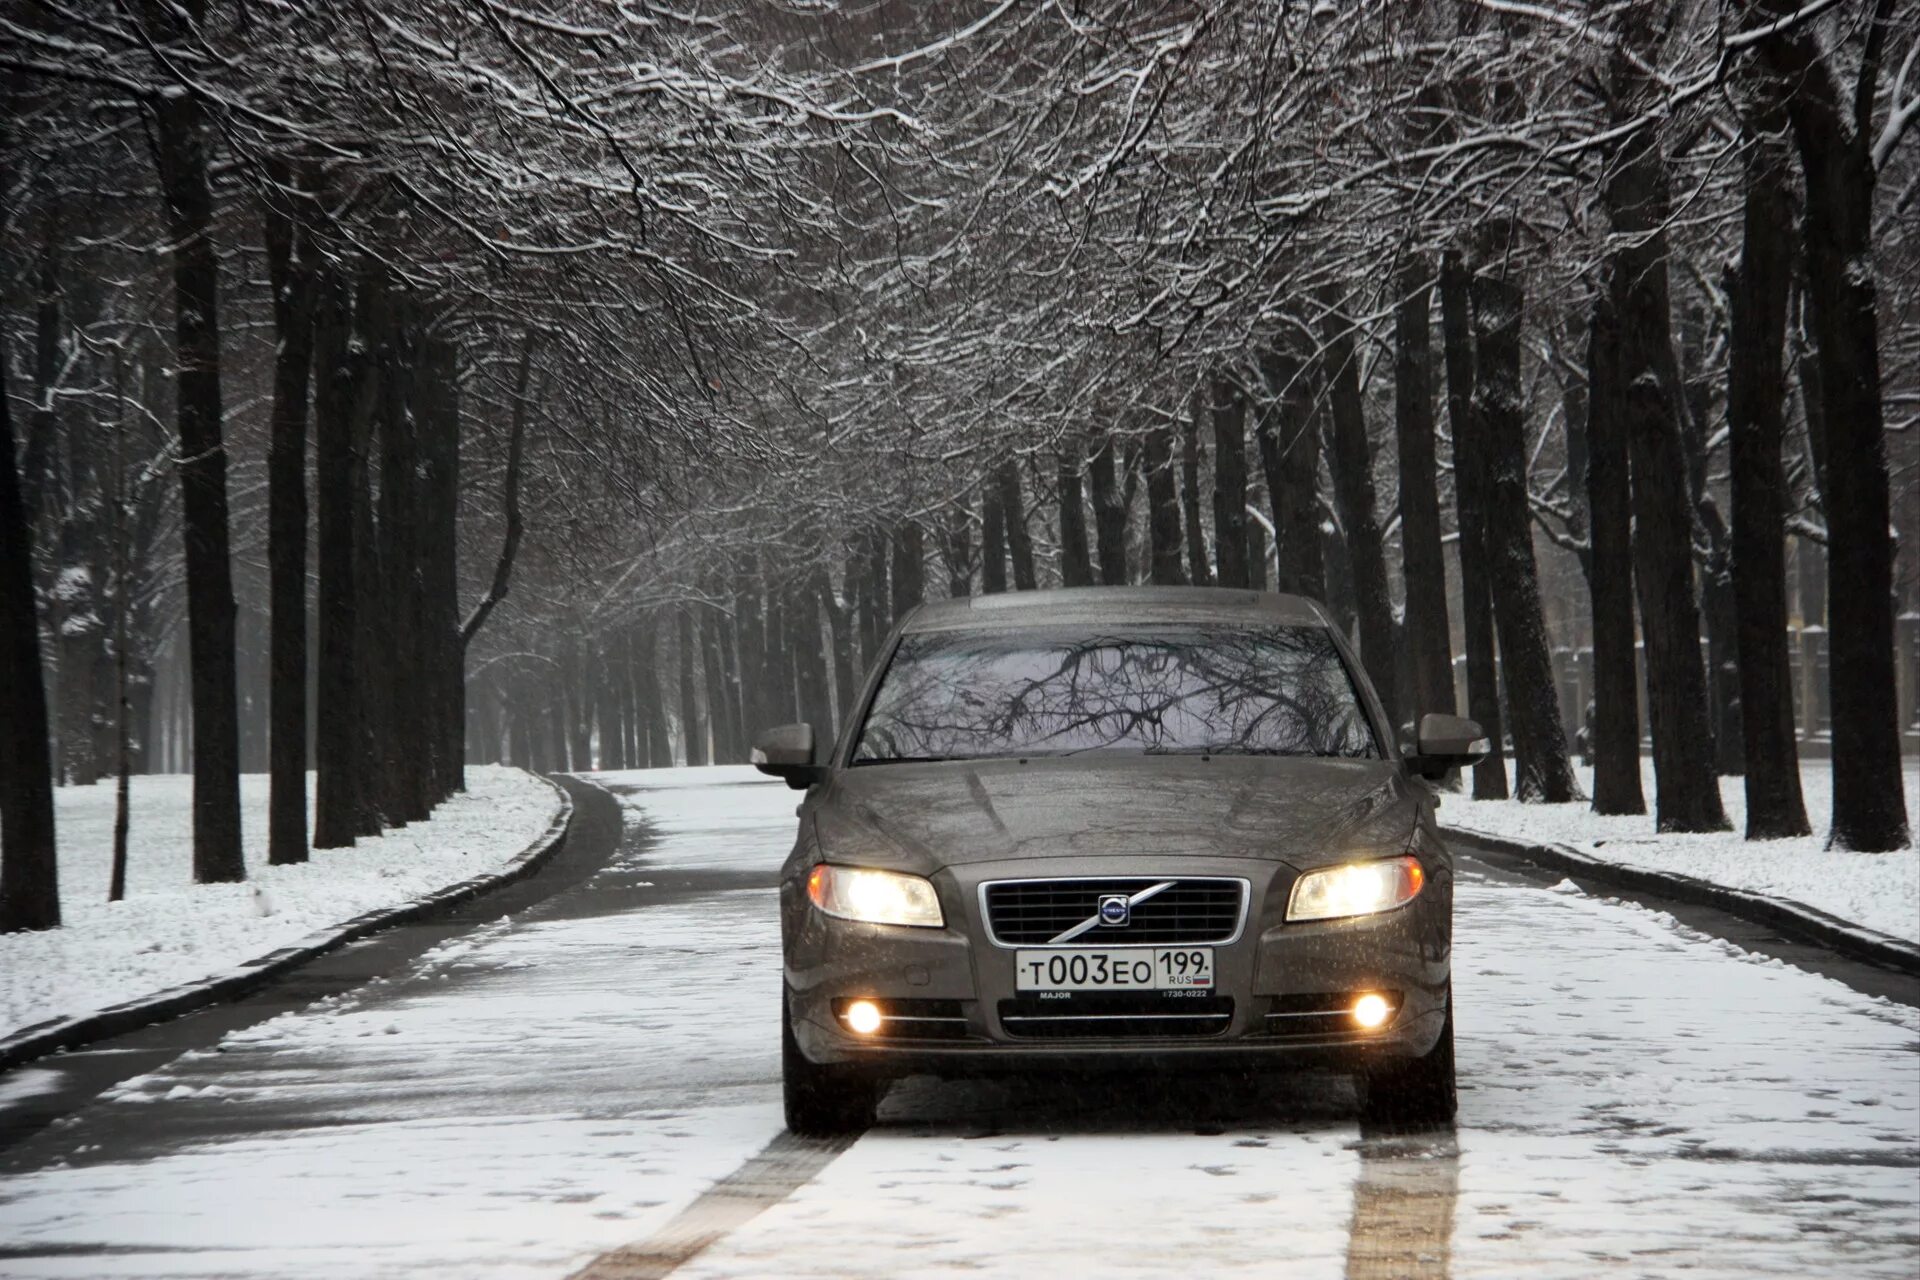 Машина снежка. Машина зимой. Машина зимой в городе. Машина в снегу. Автомобиль в снегопад.